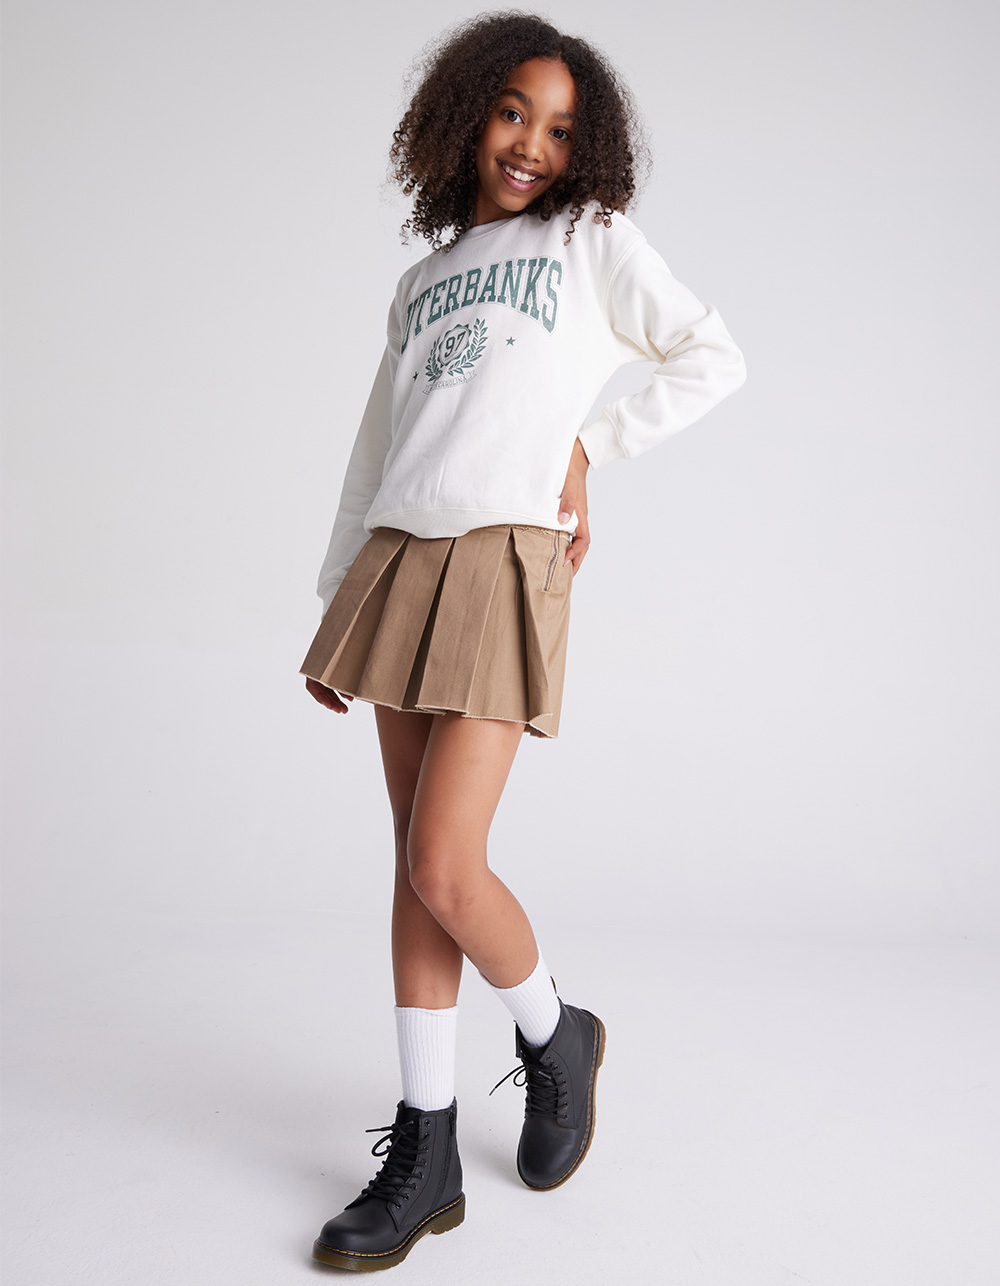 Eleven by Venus Williams Mini Skirts  Buy Eleven by Venus Williams Cute  League Skirt Online  Nykaa Fashion